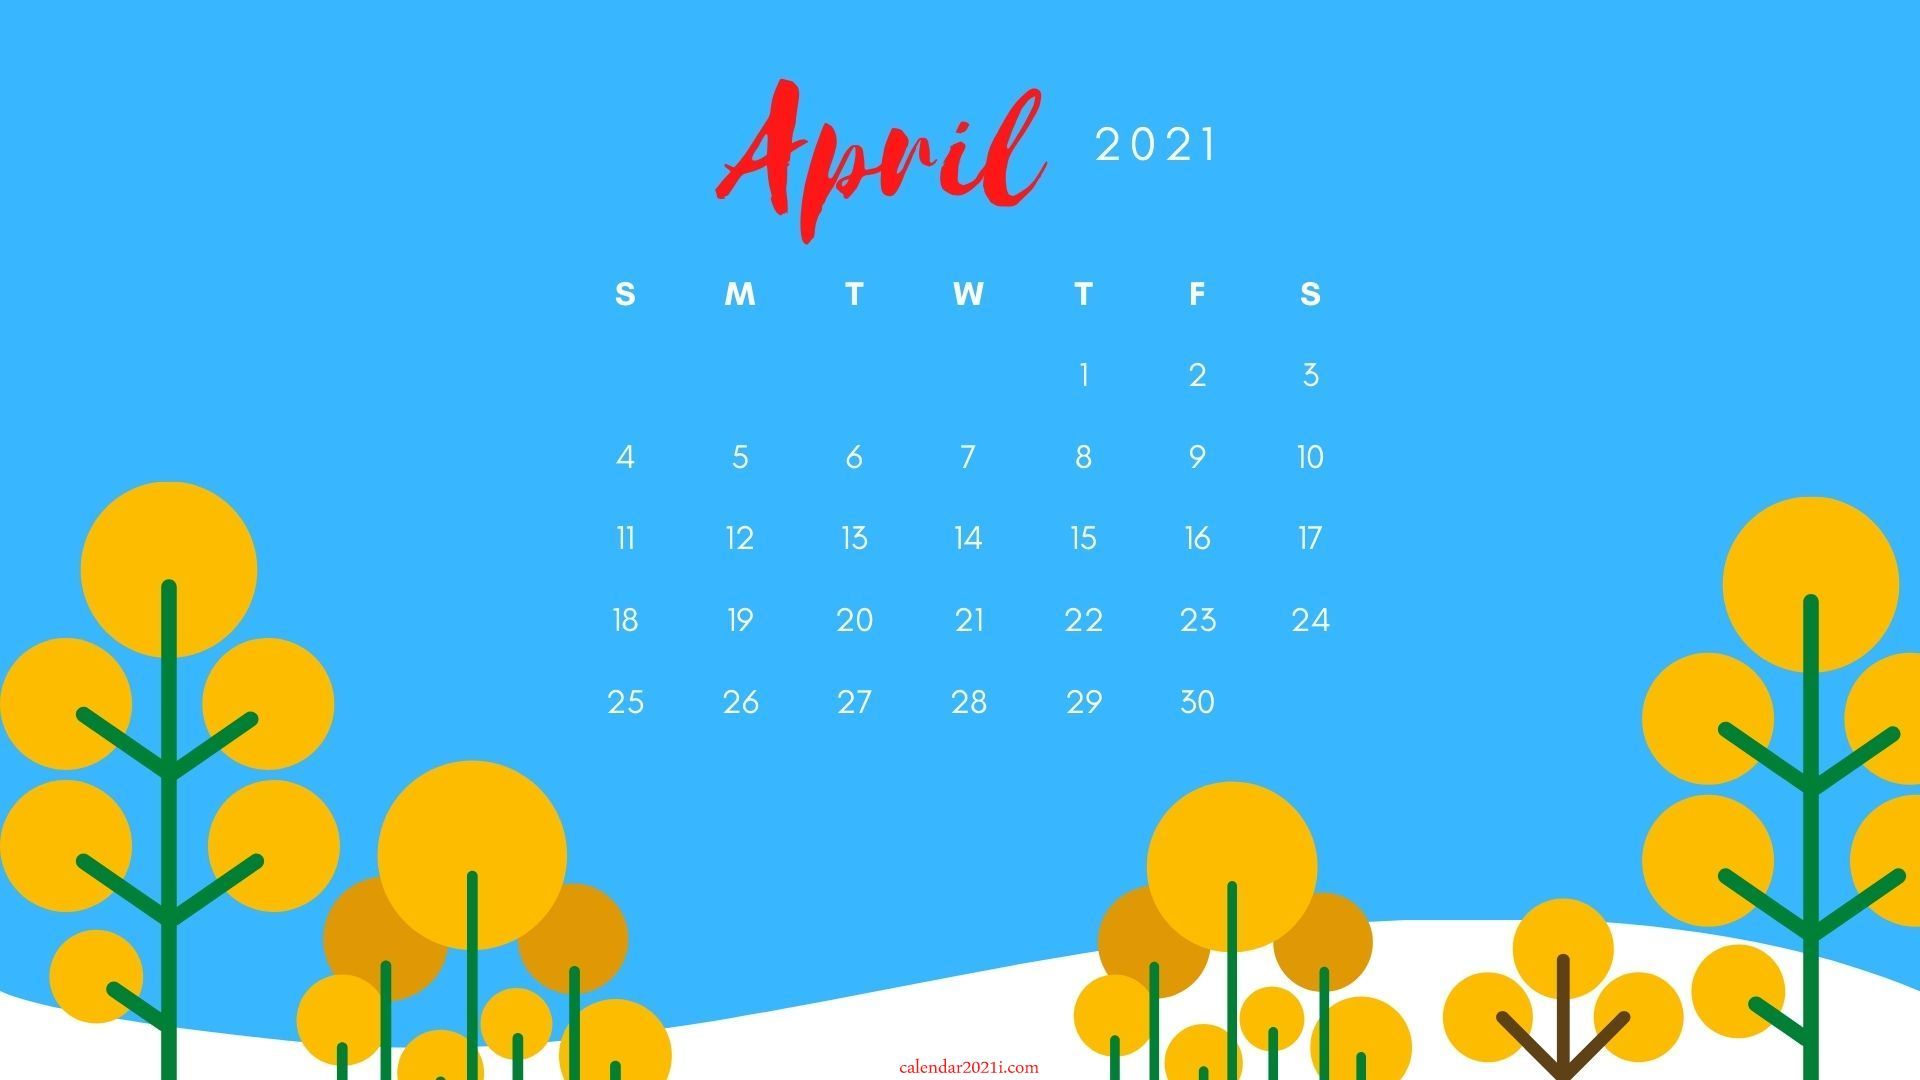 April 2021 Calendar Wallpapers   Top Free April 2021 Calendar